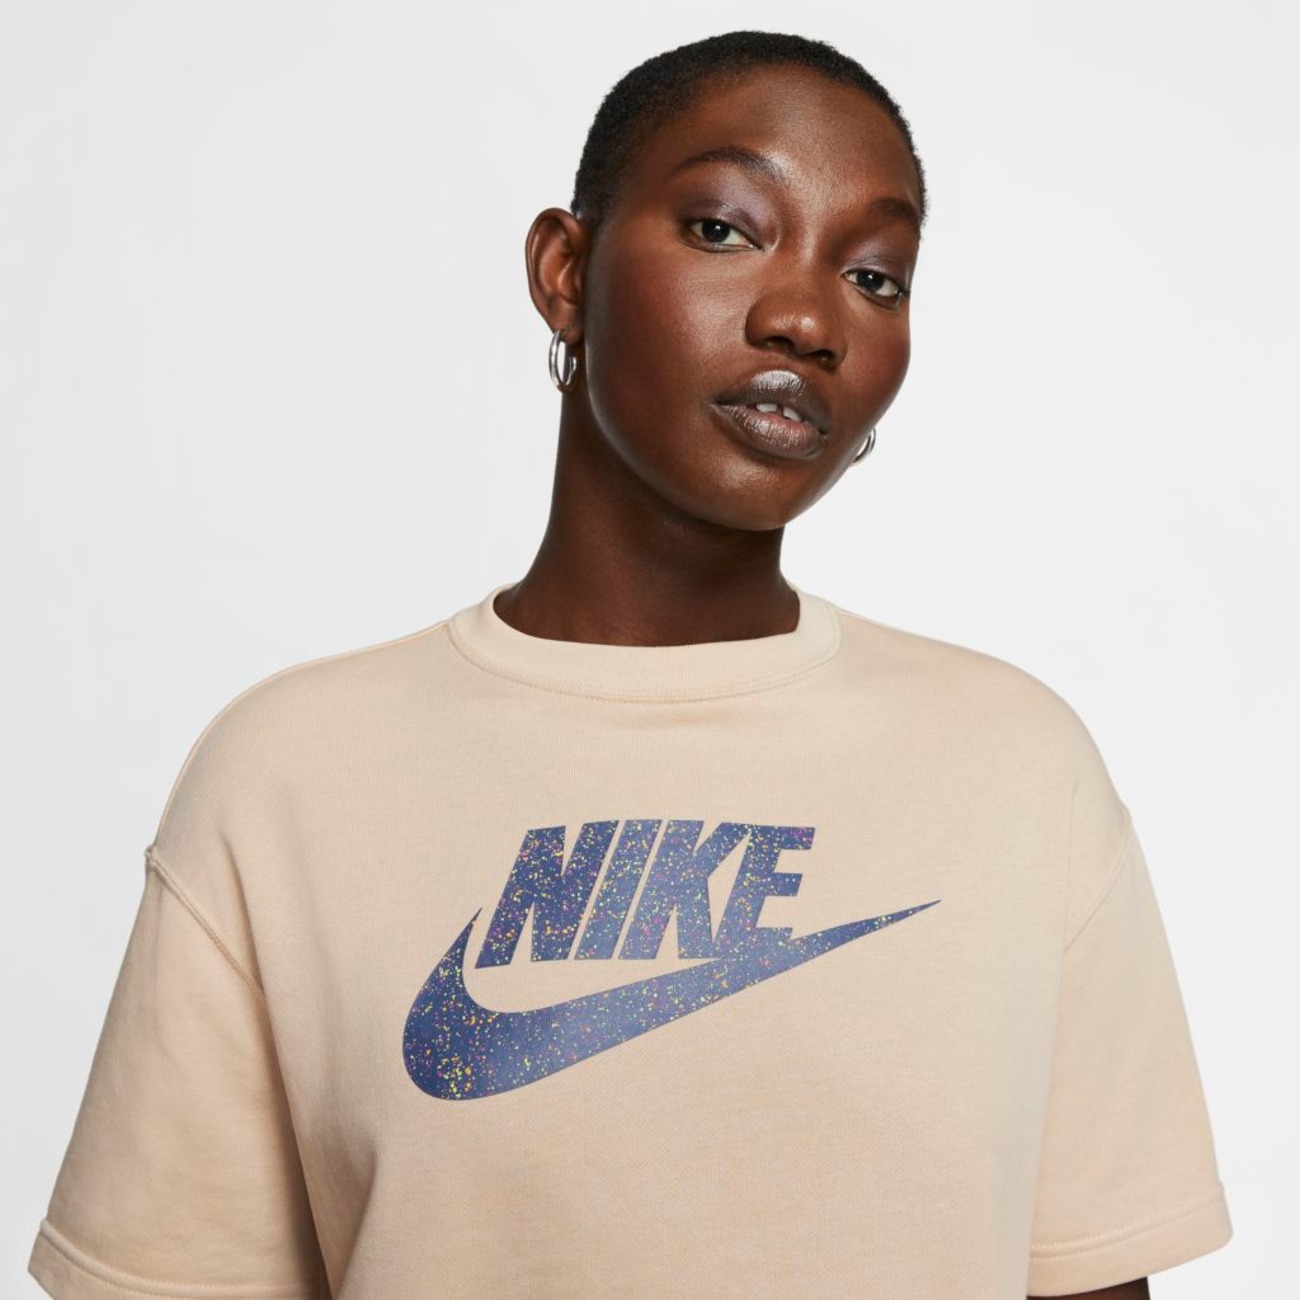 Camiseta Nike Sportswear Icon Clash Feminina - Foto 3